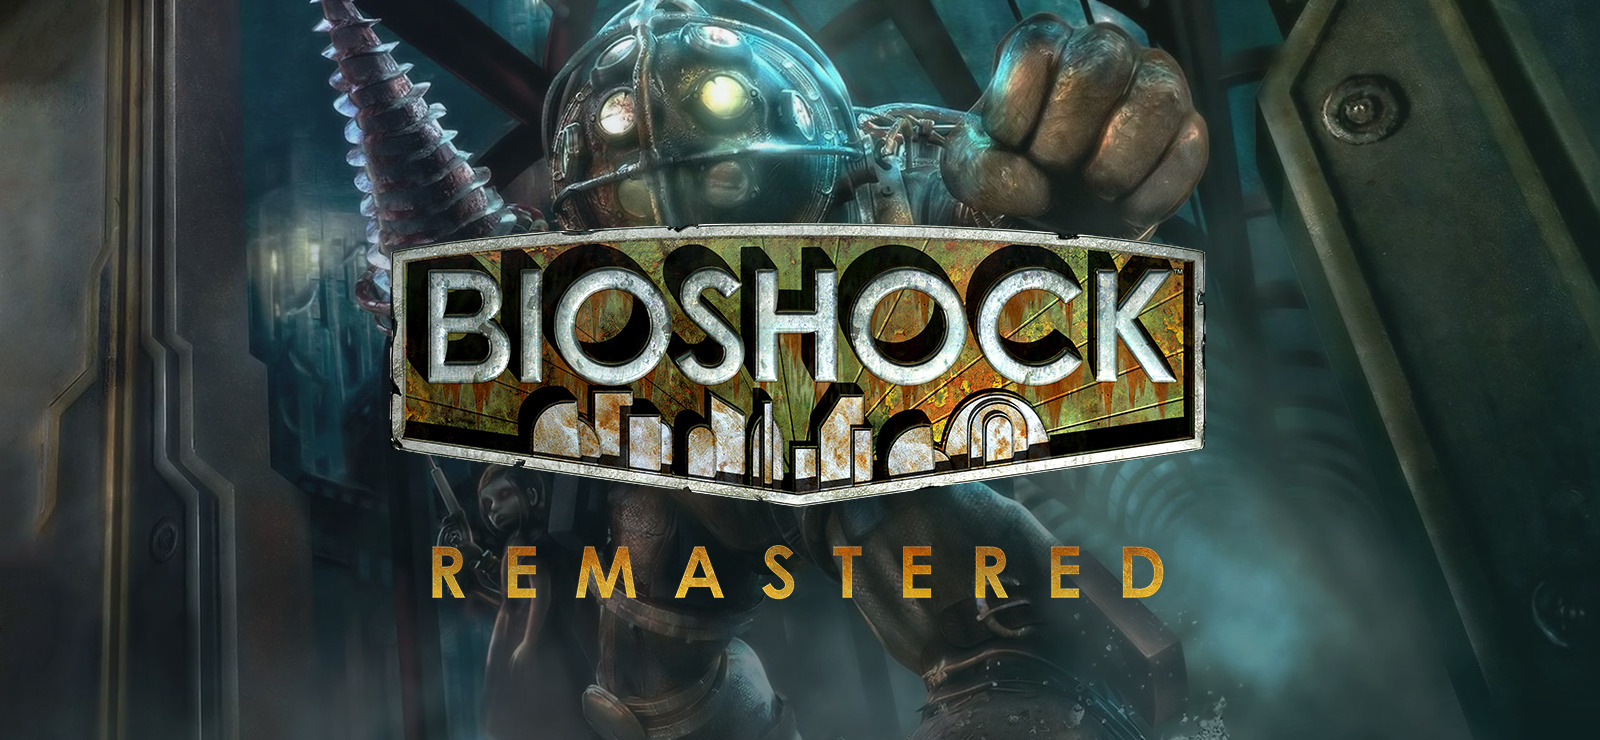 2K Bioshock : : Everything Else